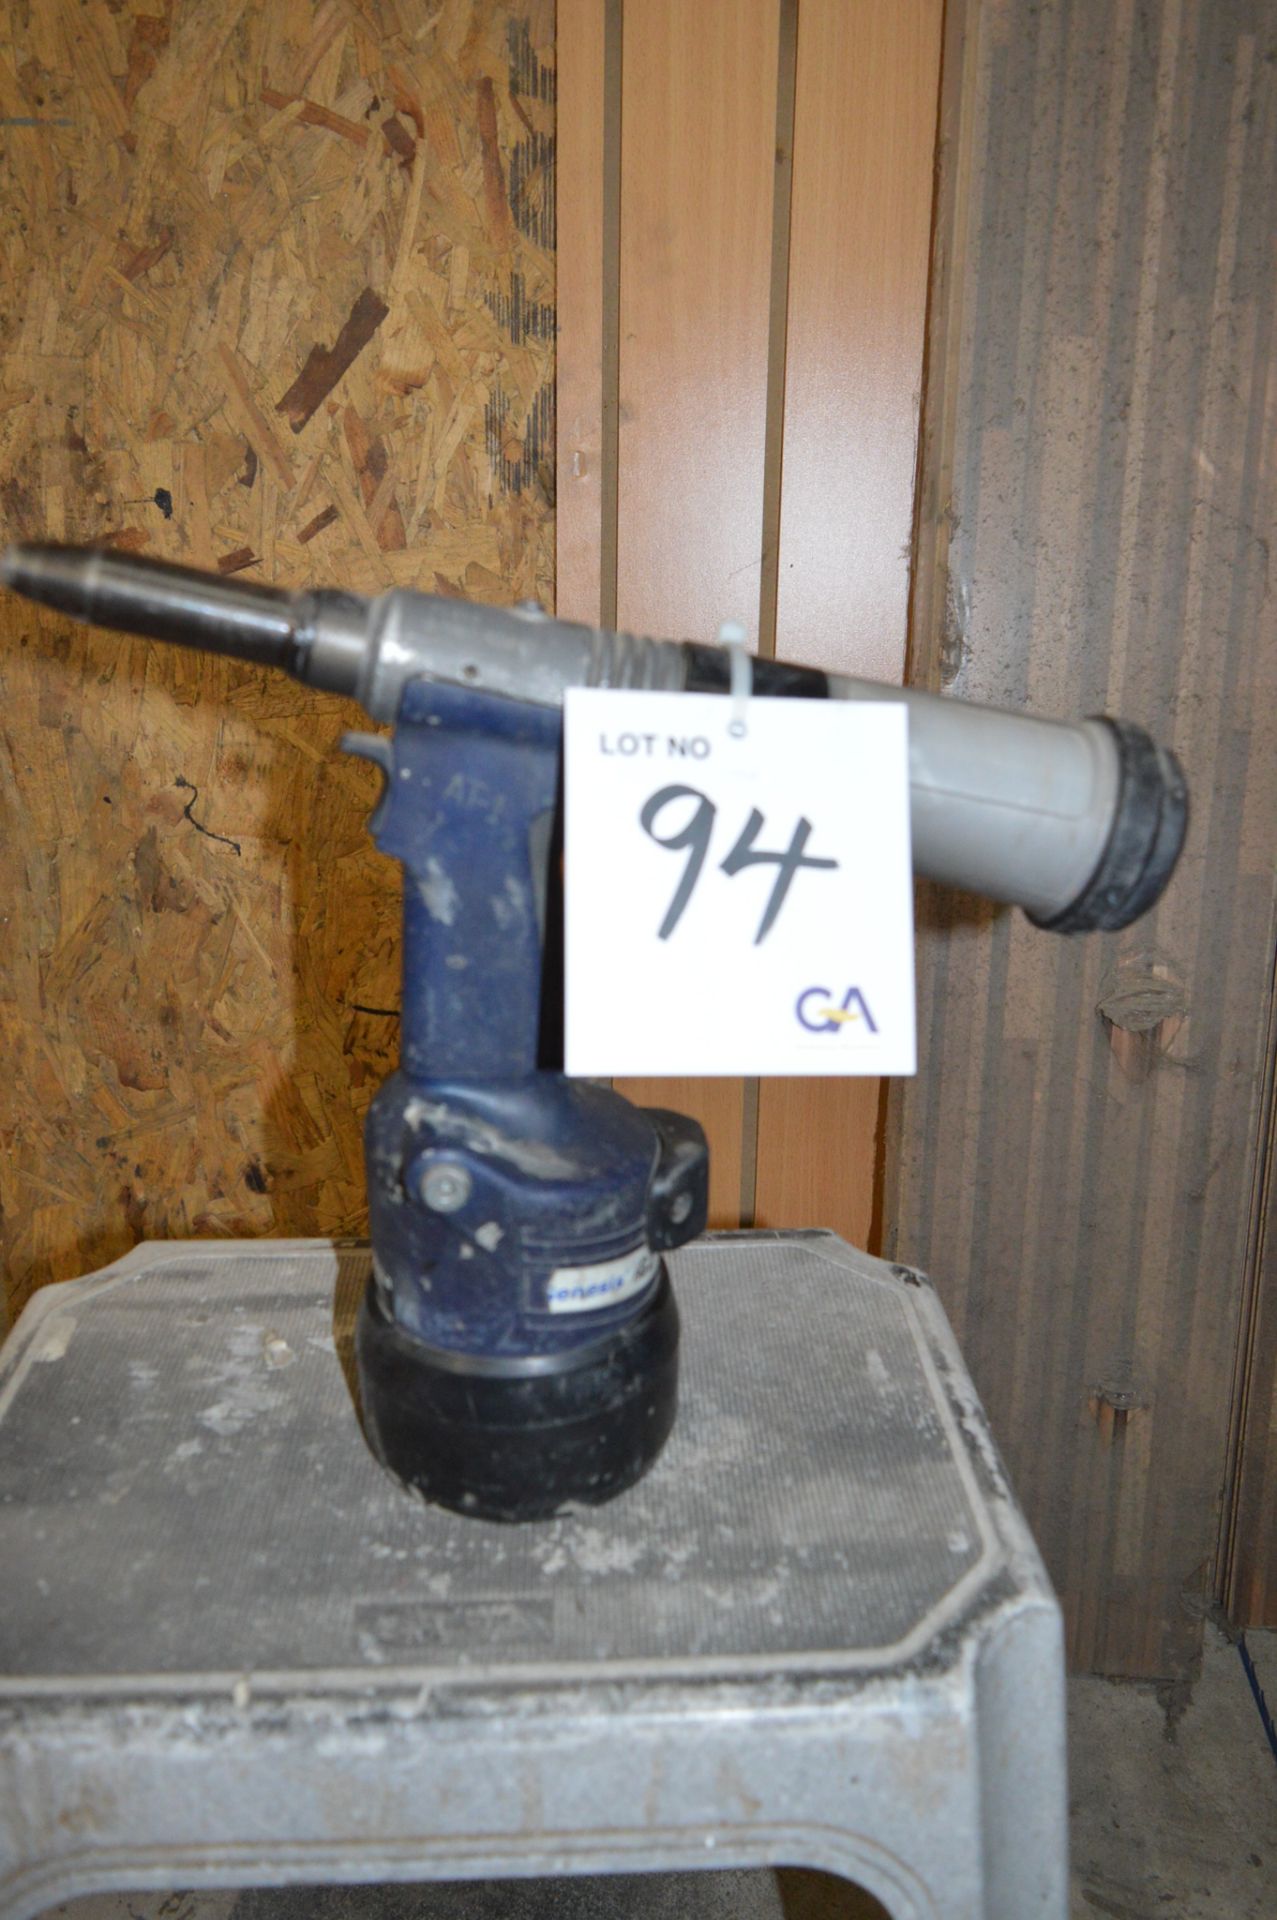 Avdel pneumatic rivet gun Model: Genesis G2 ** No VAT on hammer price but VAT will be charged on the